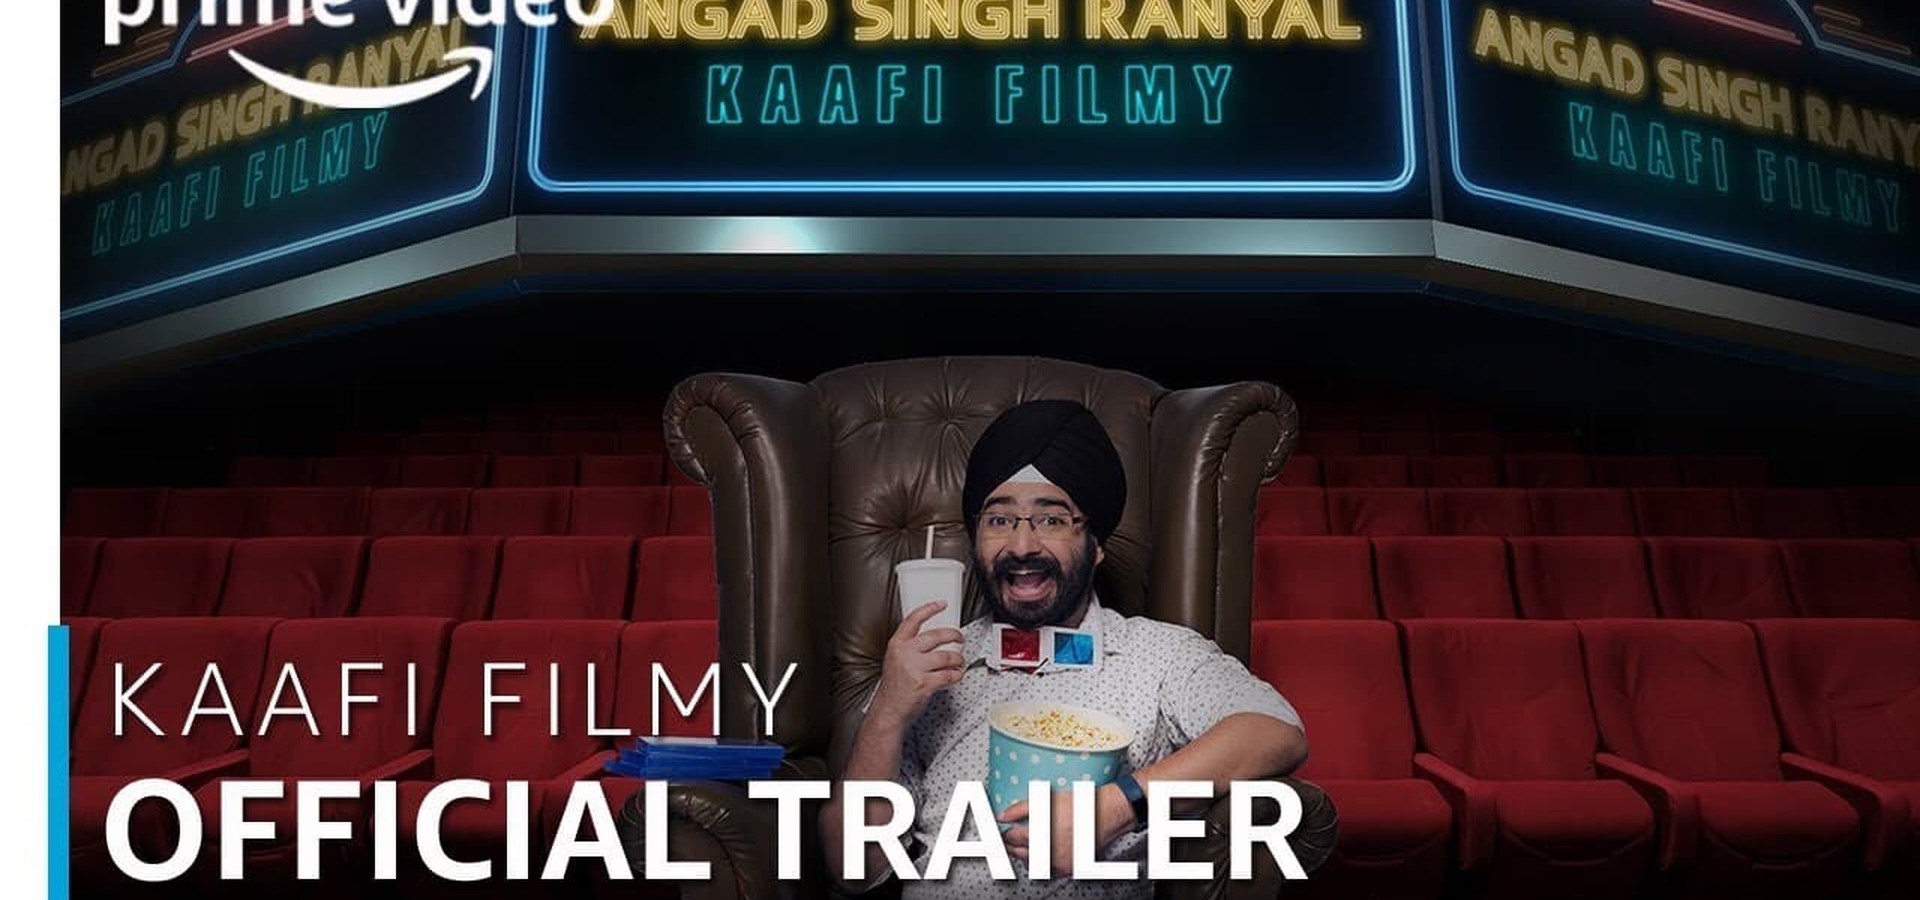 Angad Singh Ranyal: Kaafi Filmy